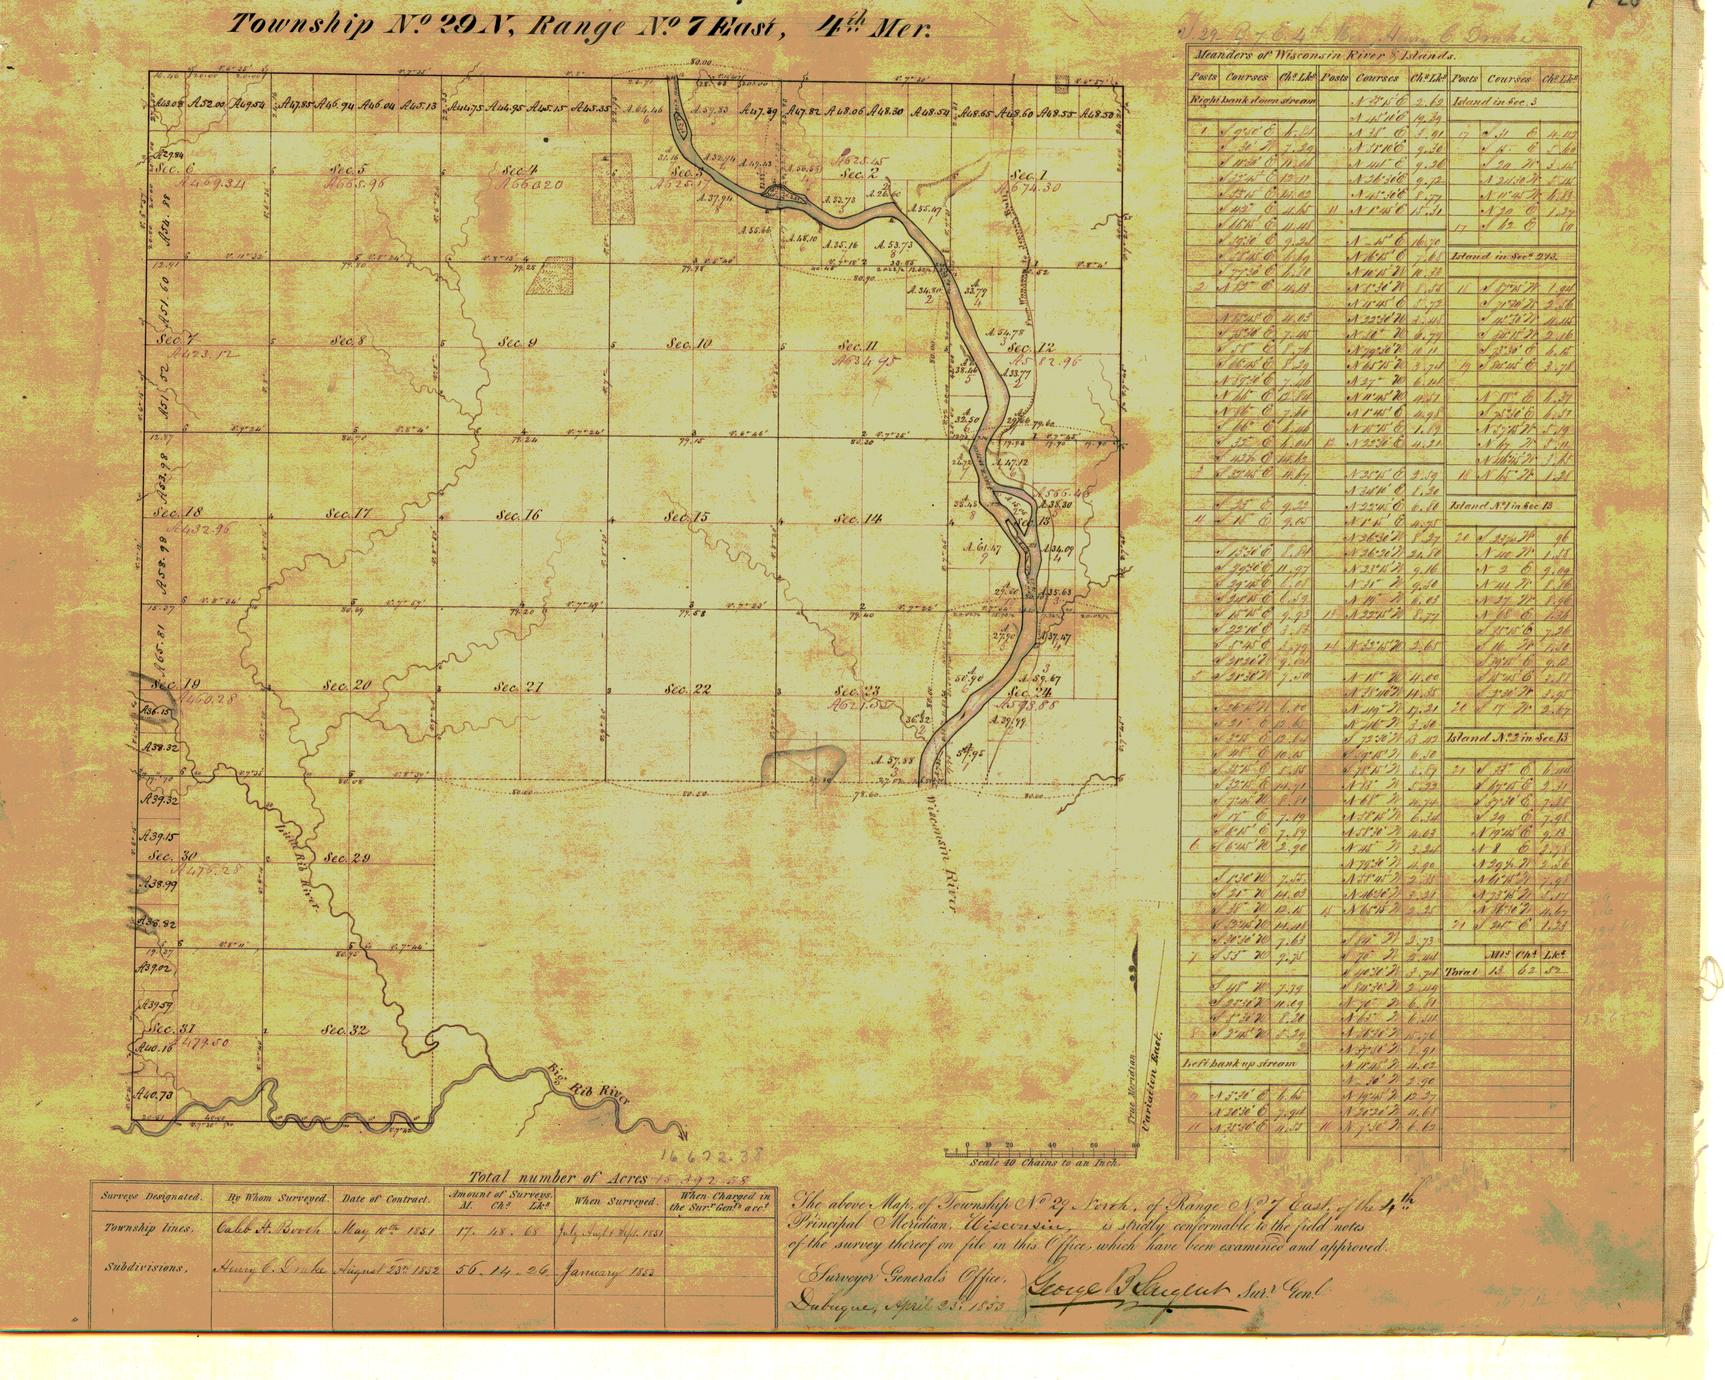 [Public Land Survey System map: Wisconsin Township 29 North, Range 07 East]